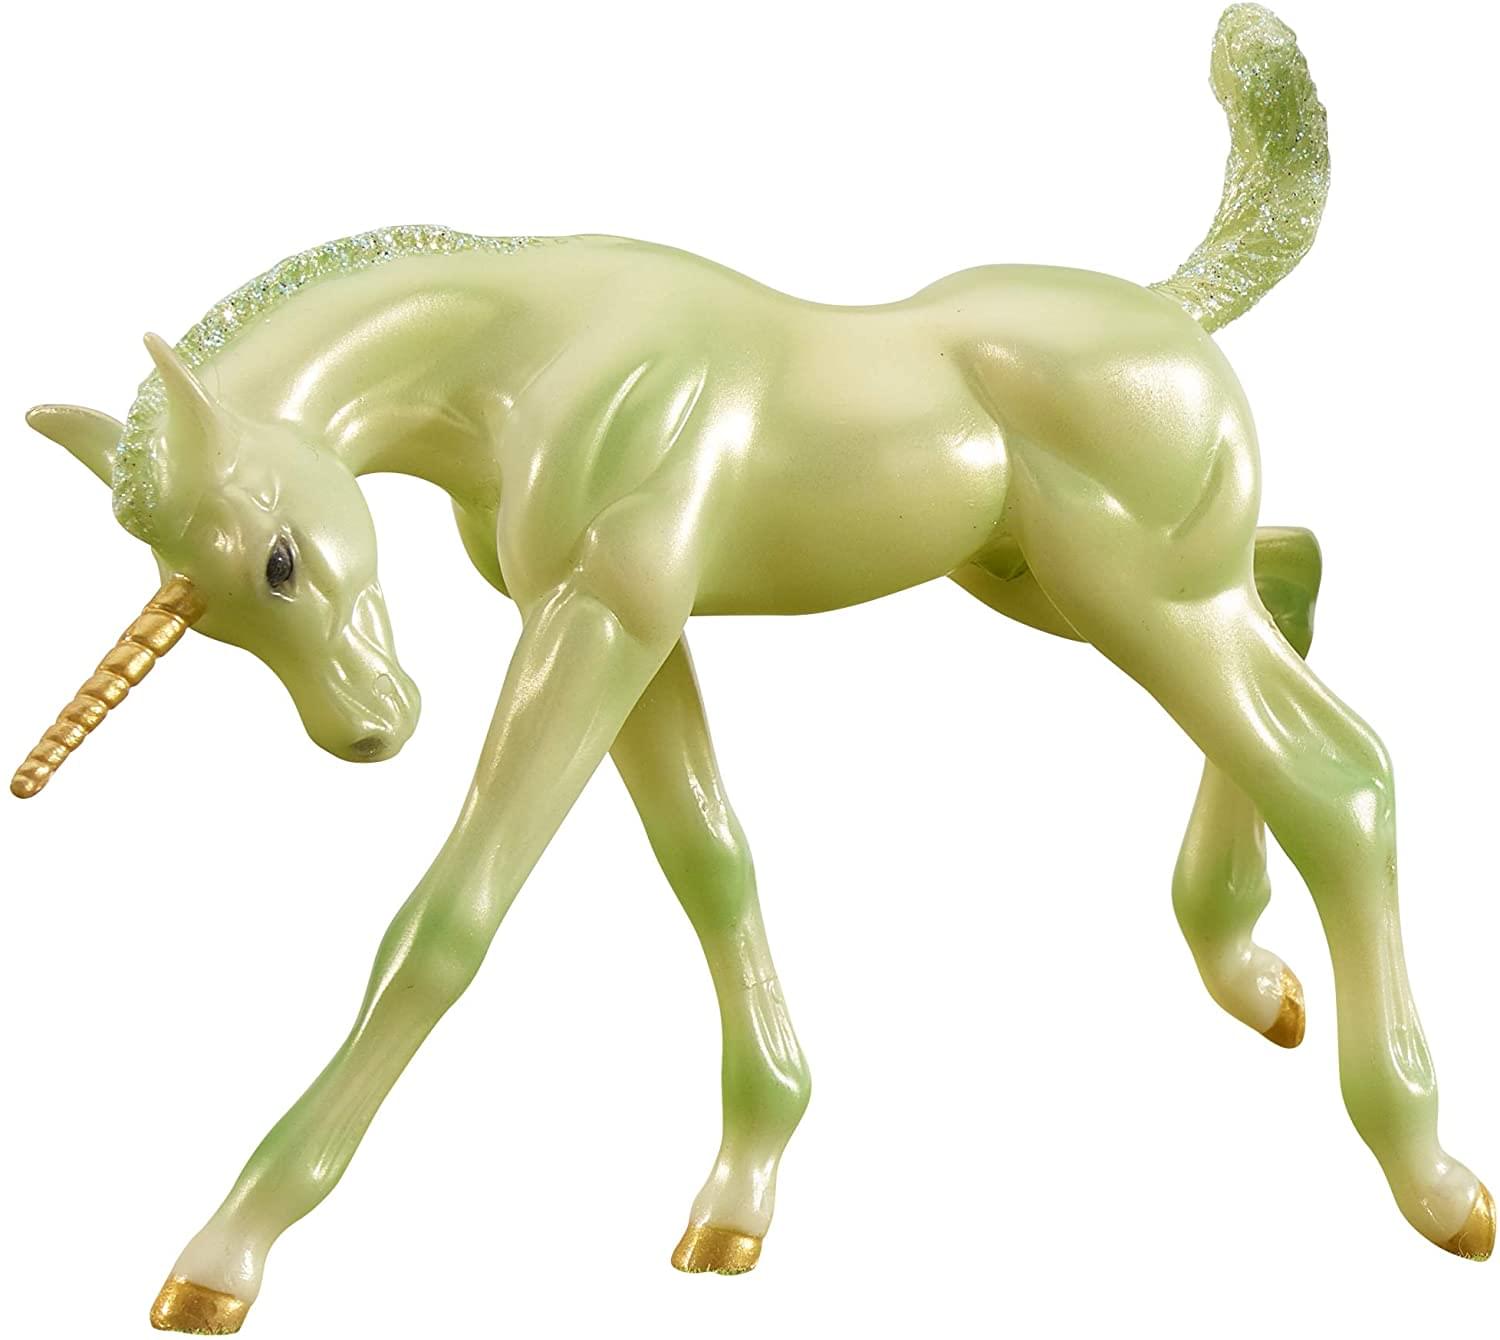 Breyer Freedom Series 1:12 Scale Model Horse Set | Zoe & Zander Unicorn Foals